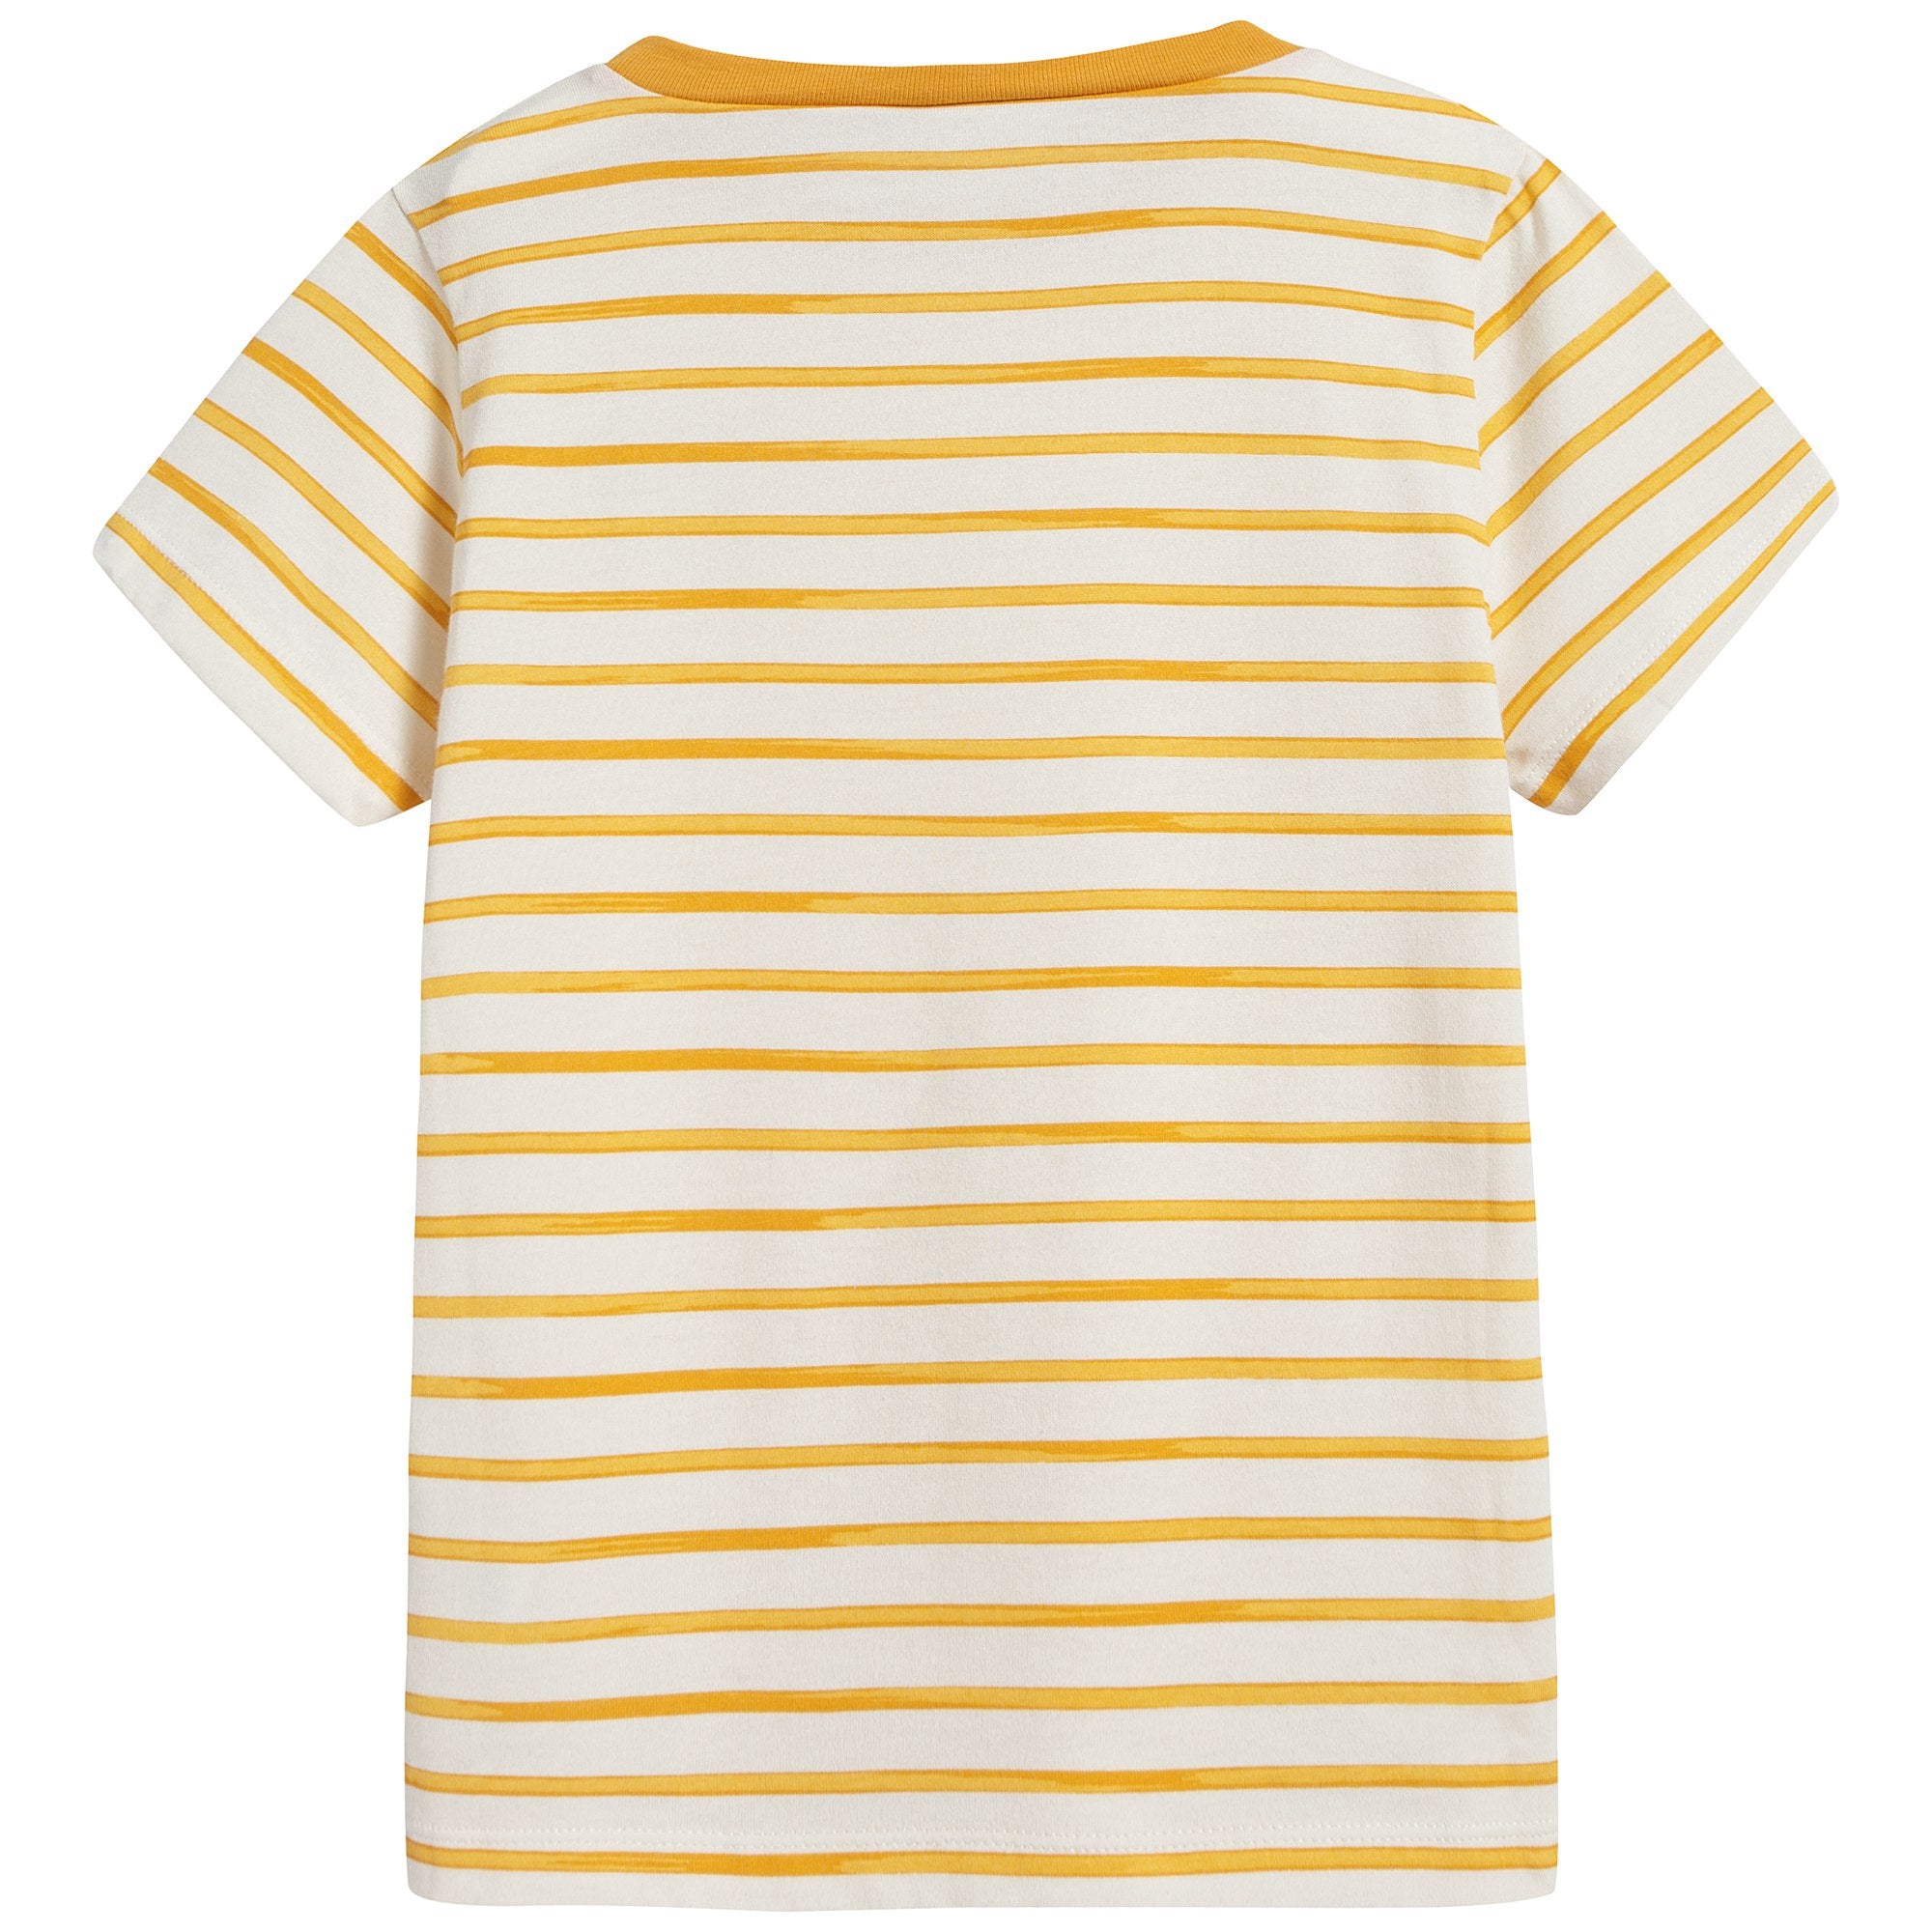 Girls Yellow Cotton T-shirt